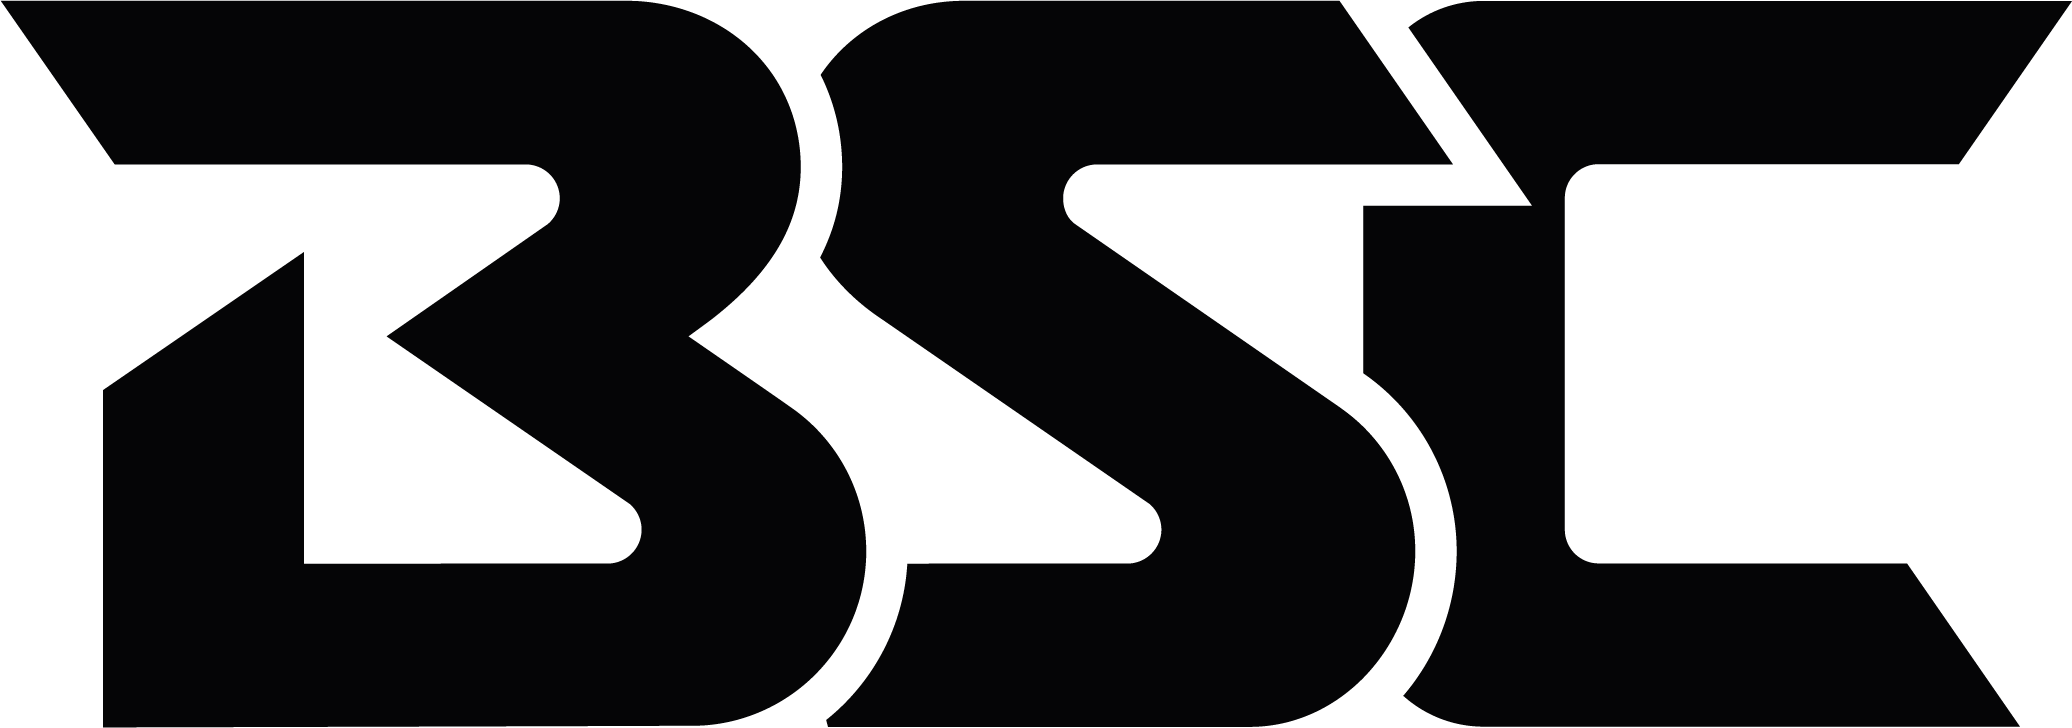 Logo black and white BSC Colzani